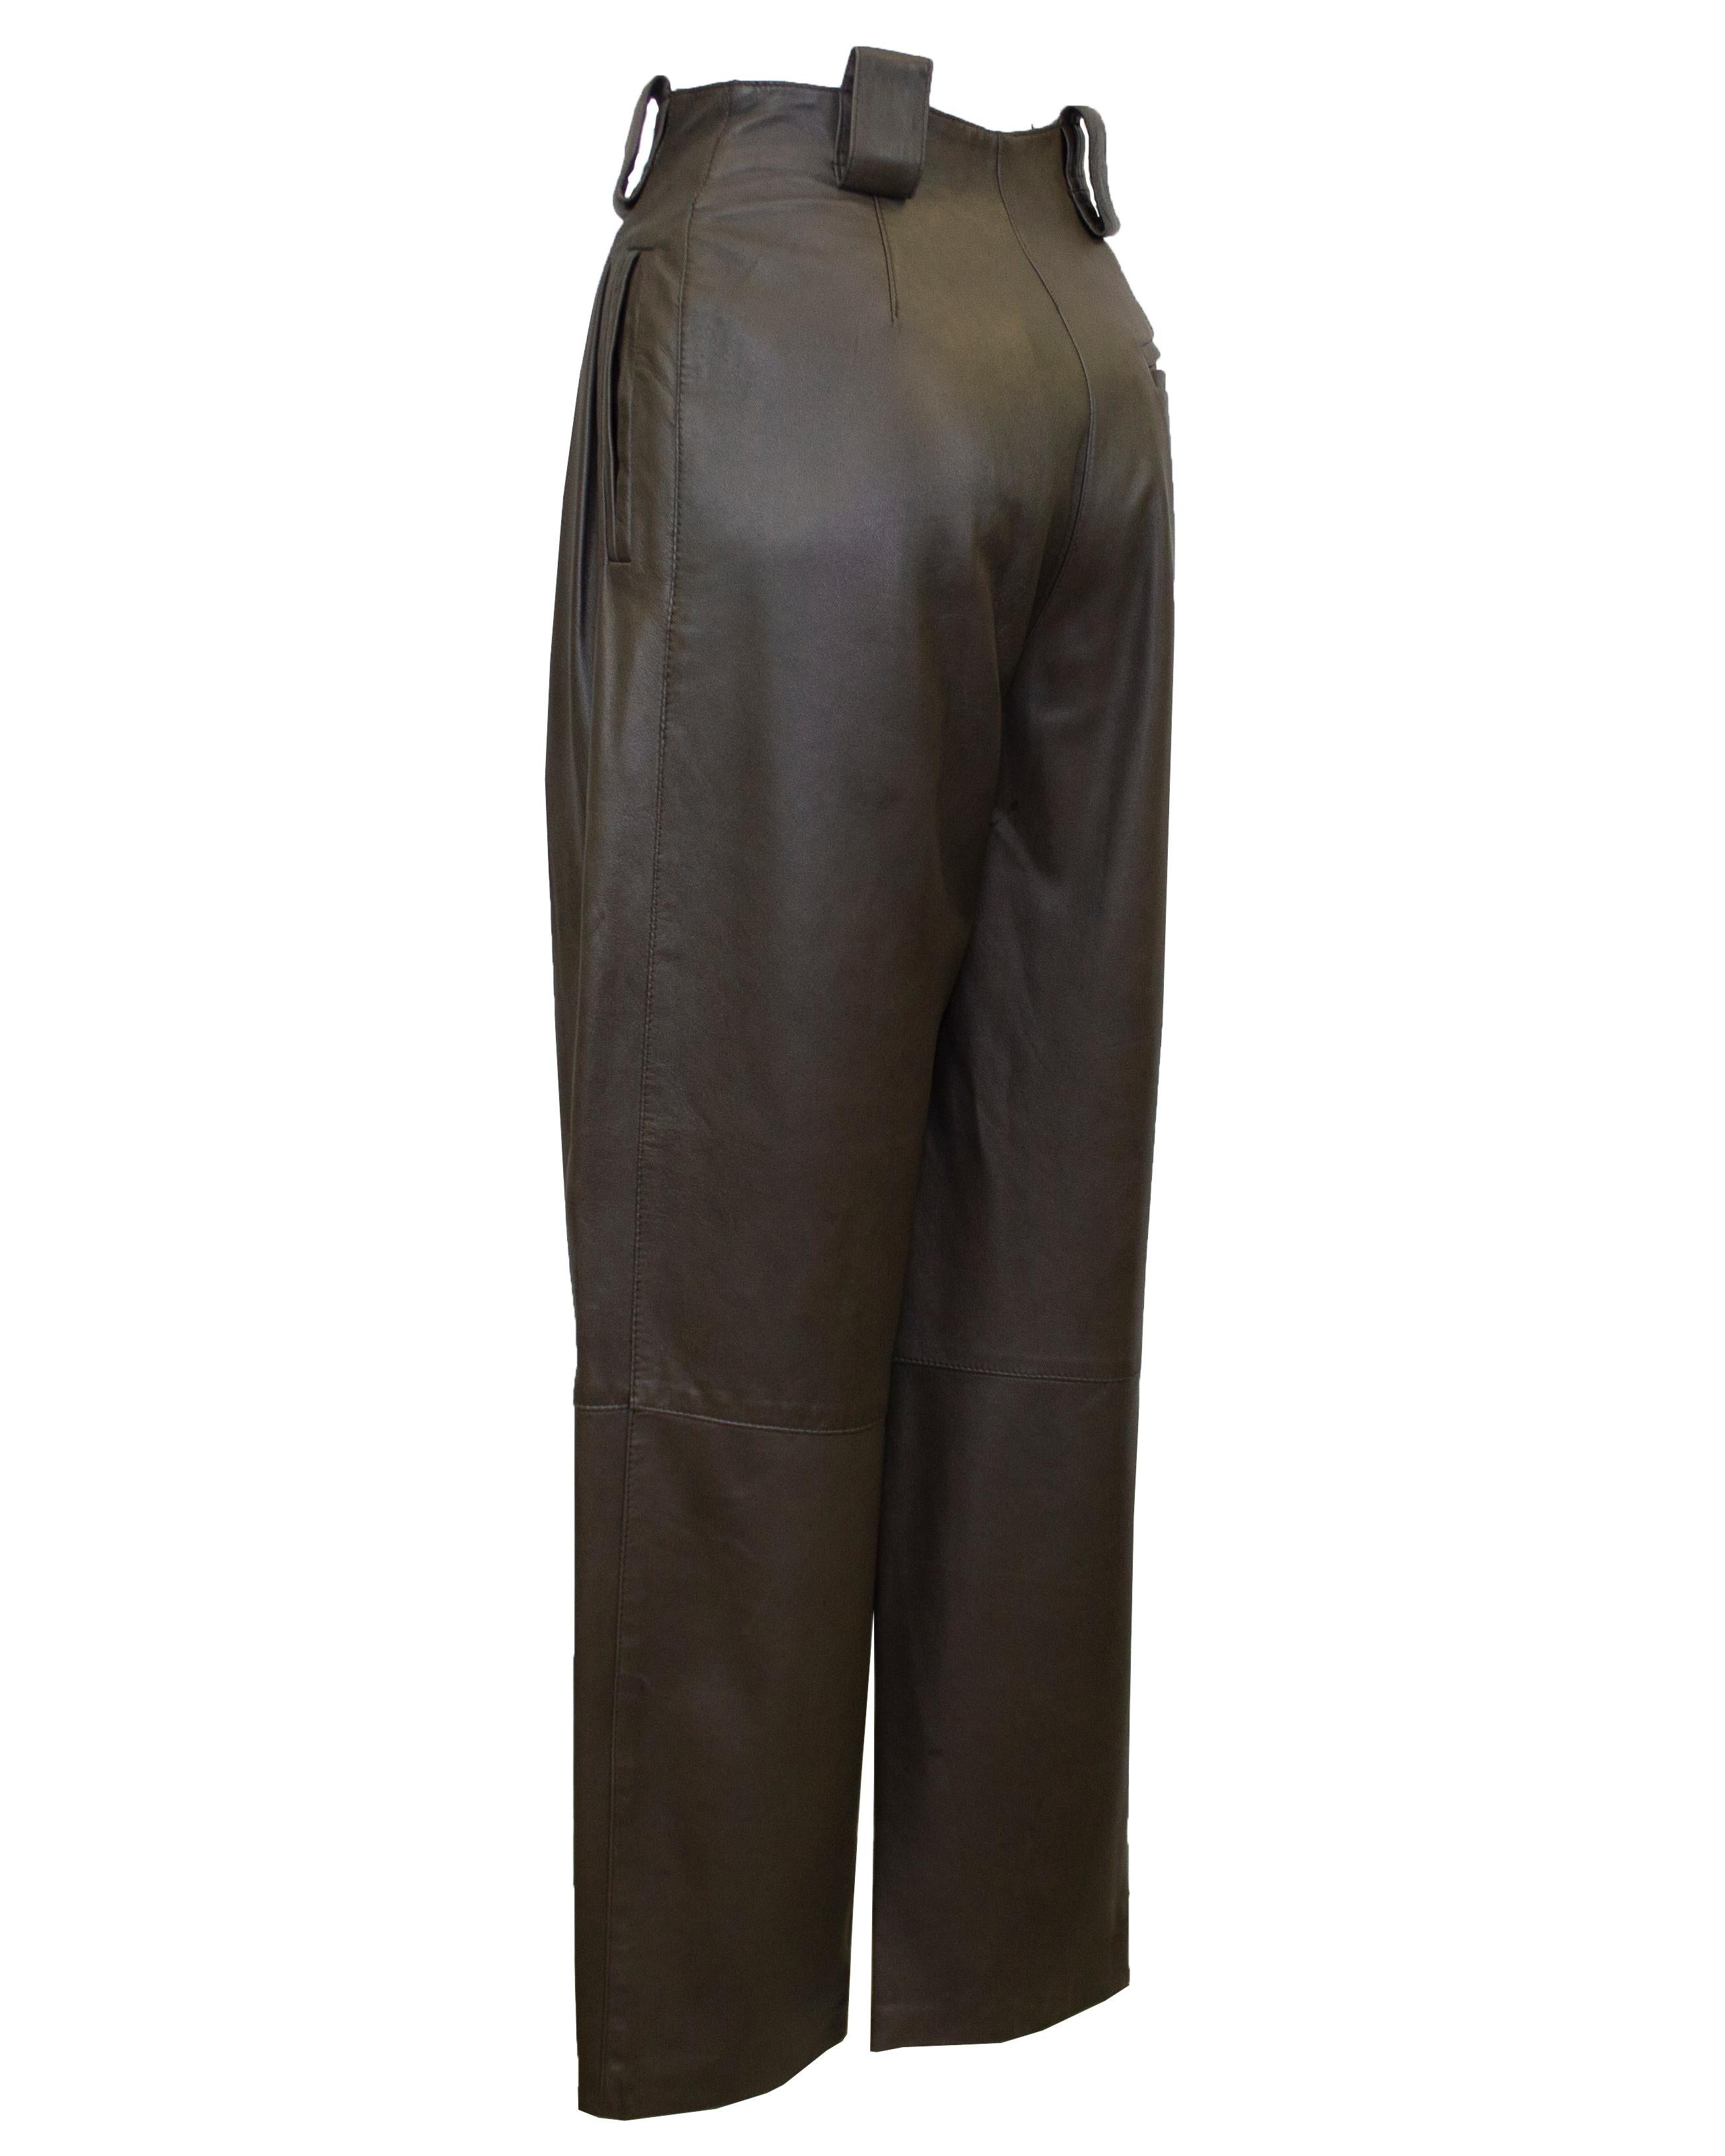 Black 1980s Krizia Olive Green Leather Pleat Front Pants 